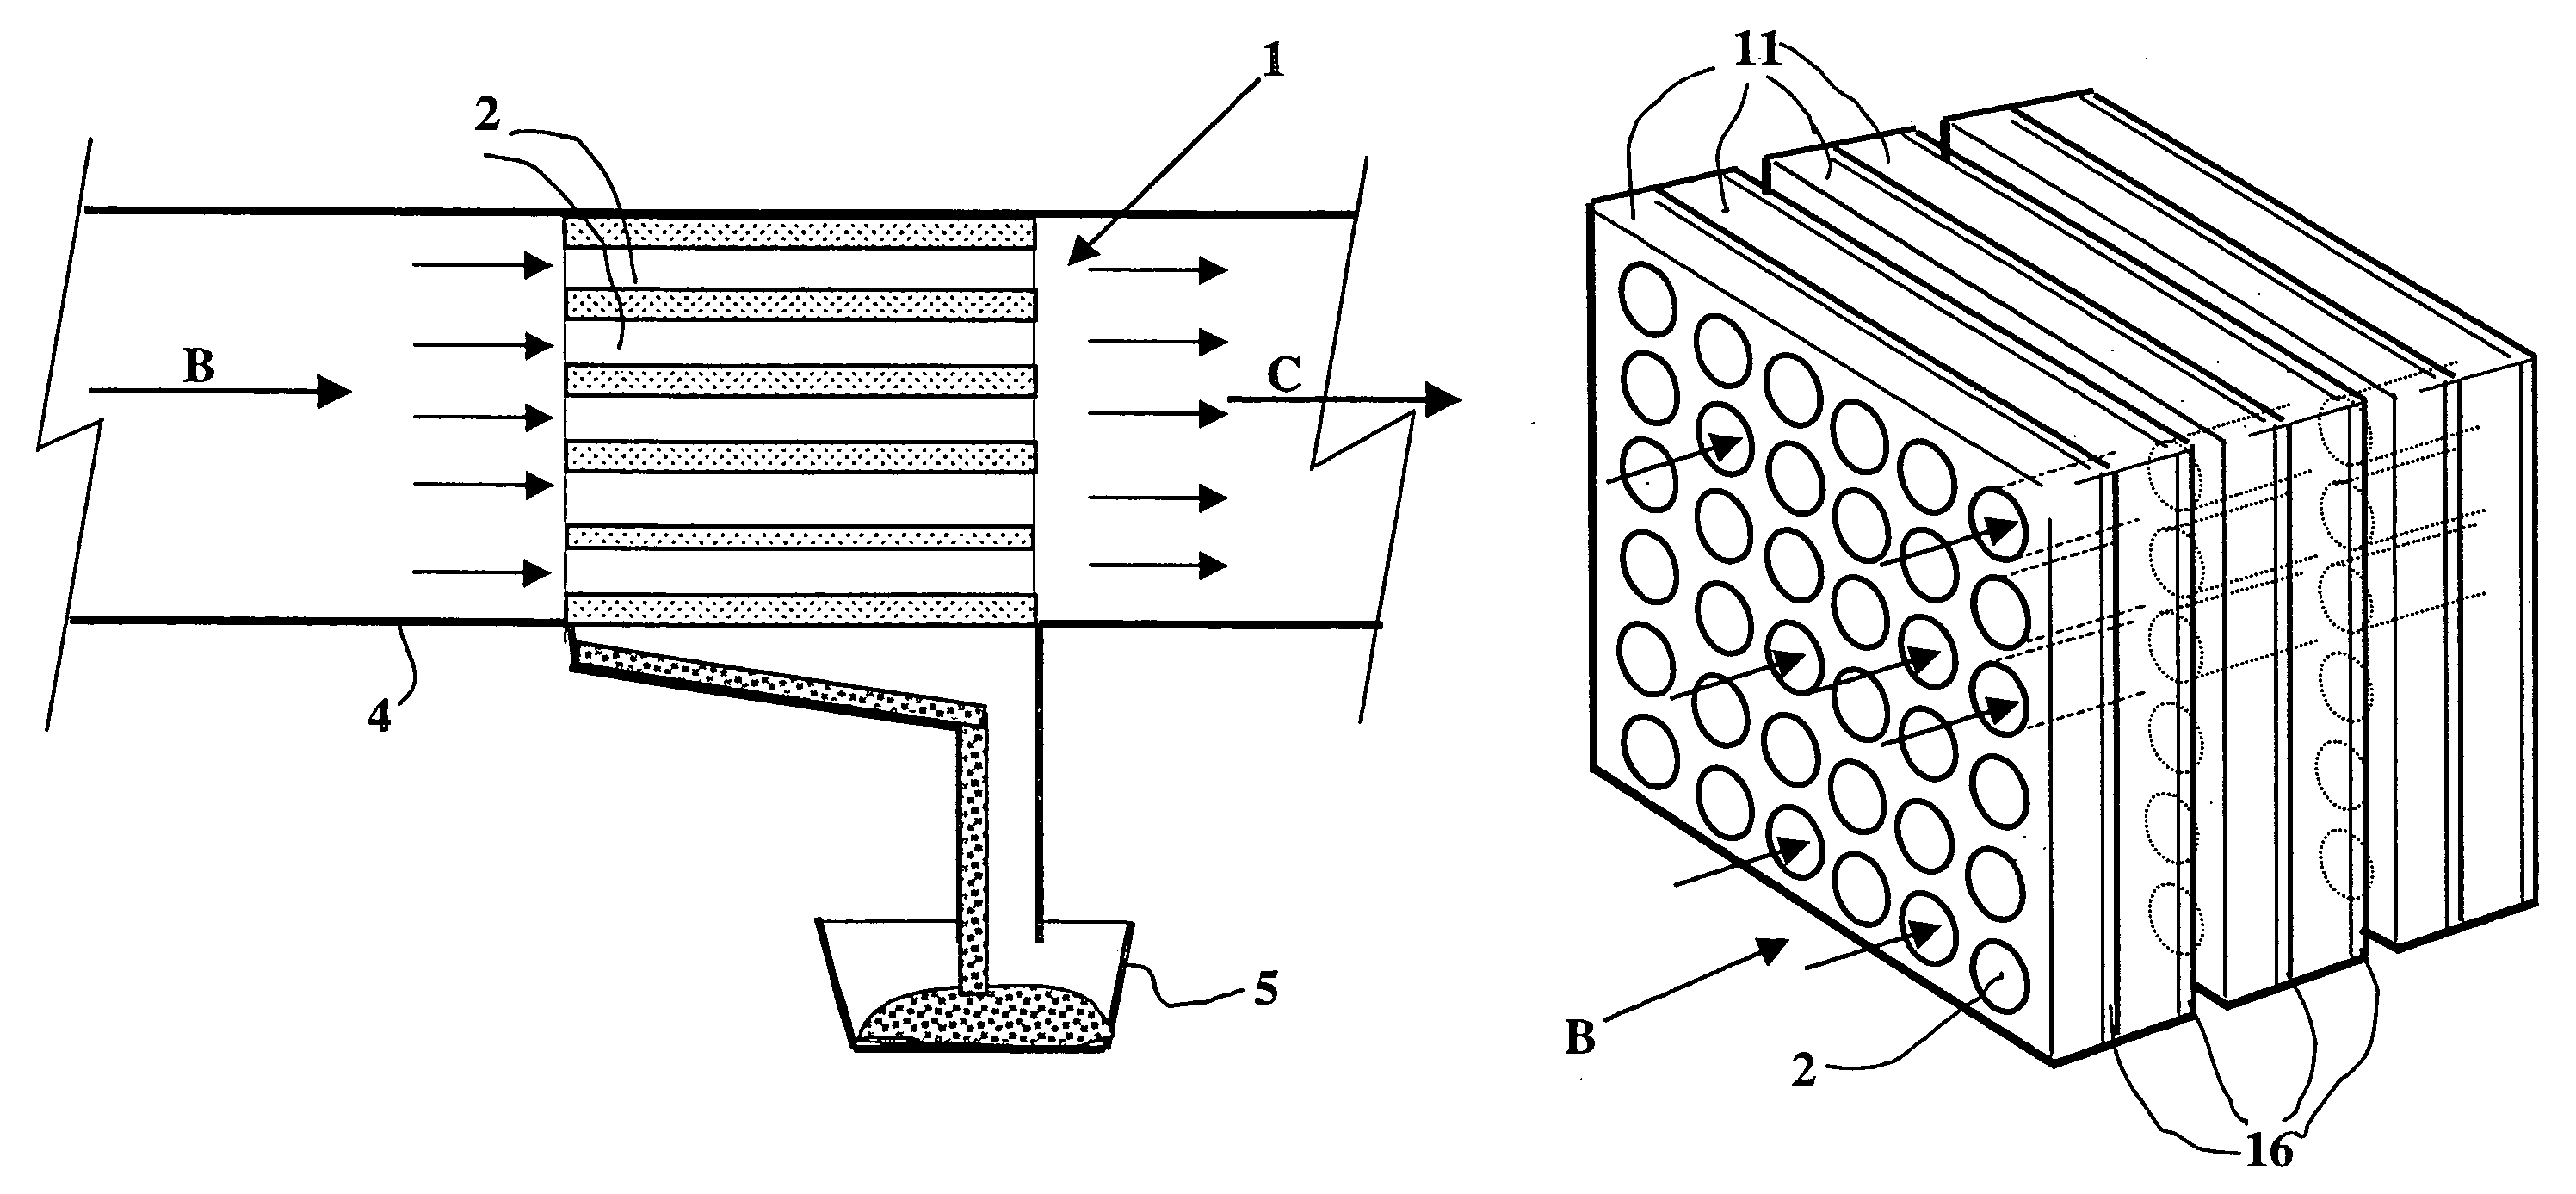 Separator made of a fibrous porous material such as a felt